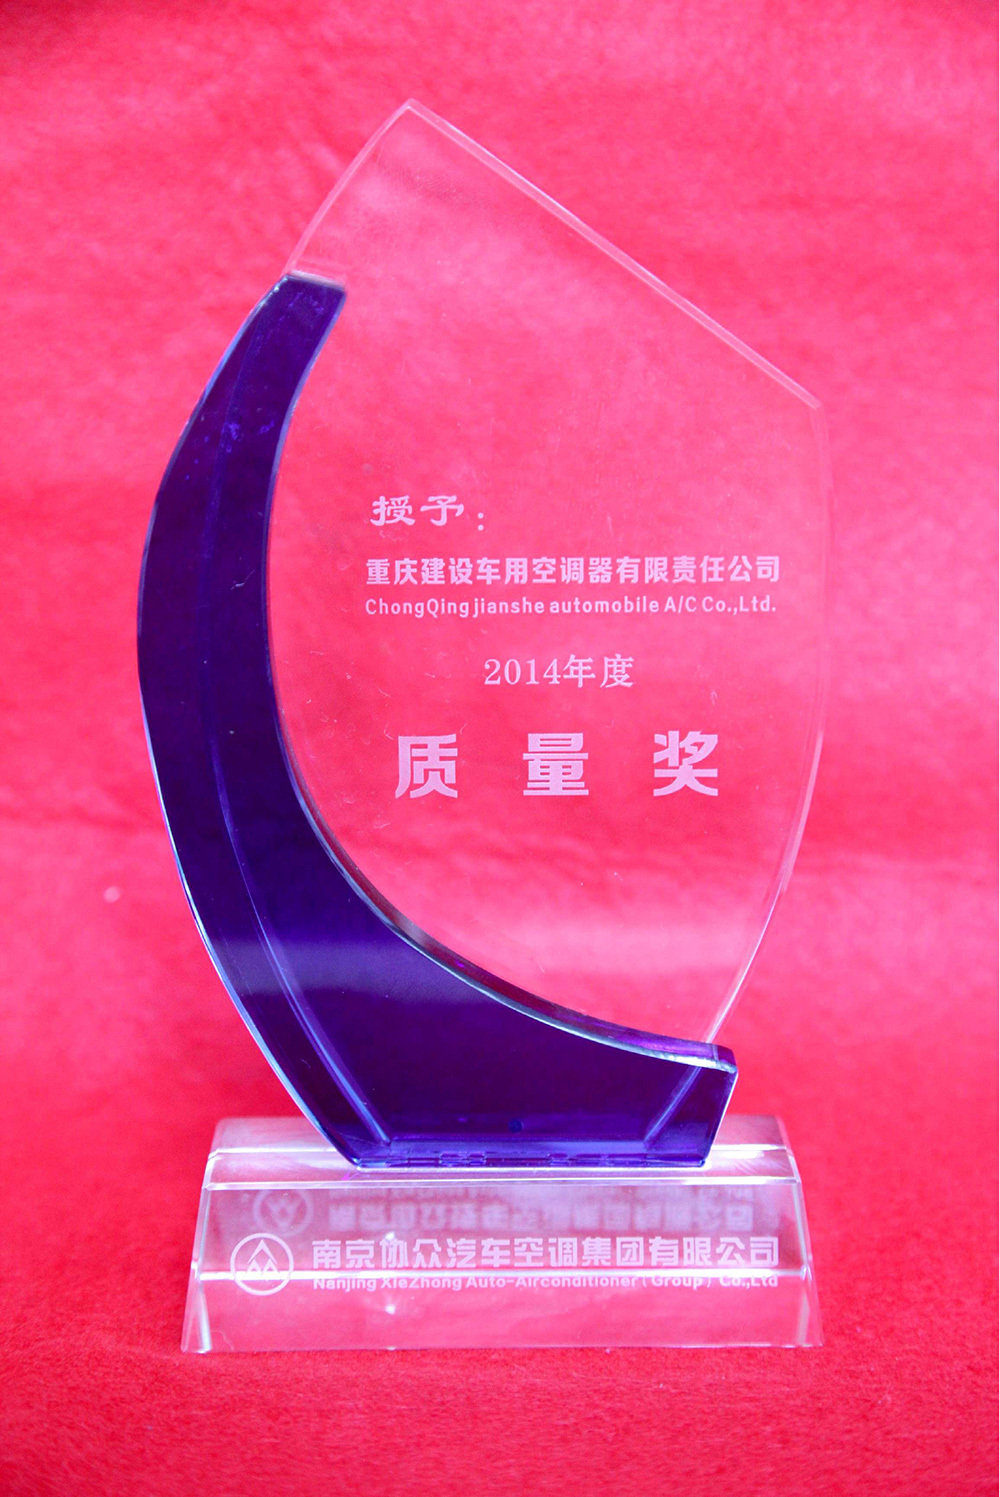 2014 Quality Award